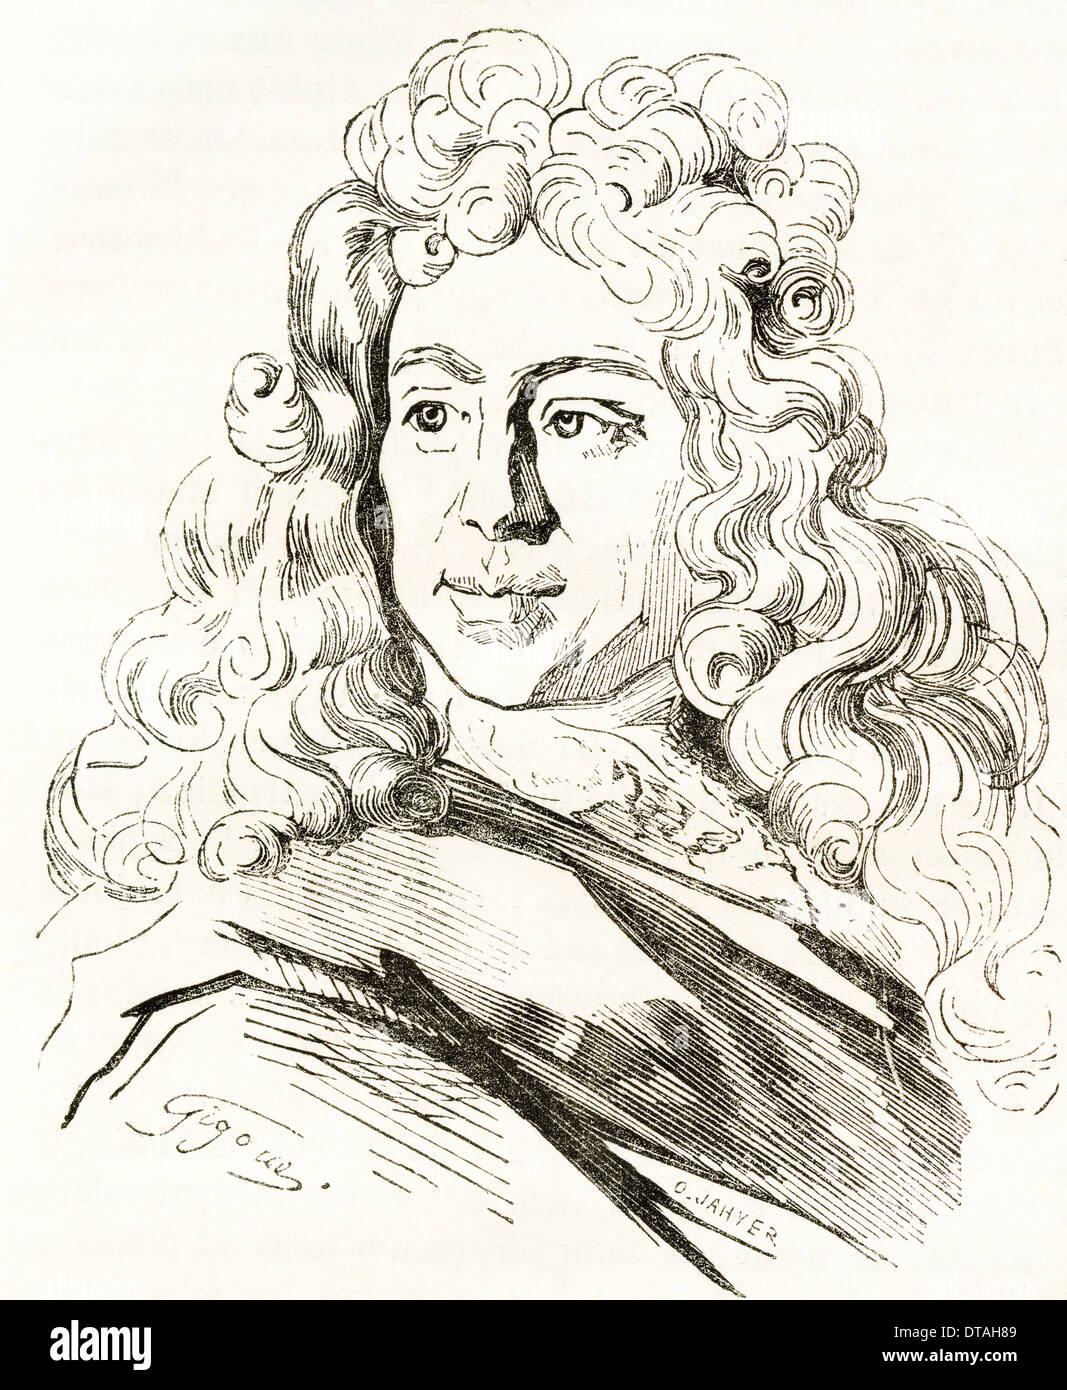 Isaac de Benserade, 1613 - 1691. Poète français. Banque D'Images